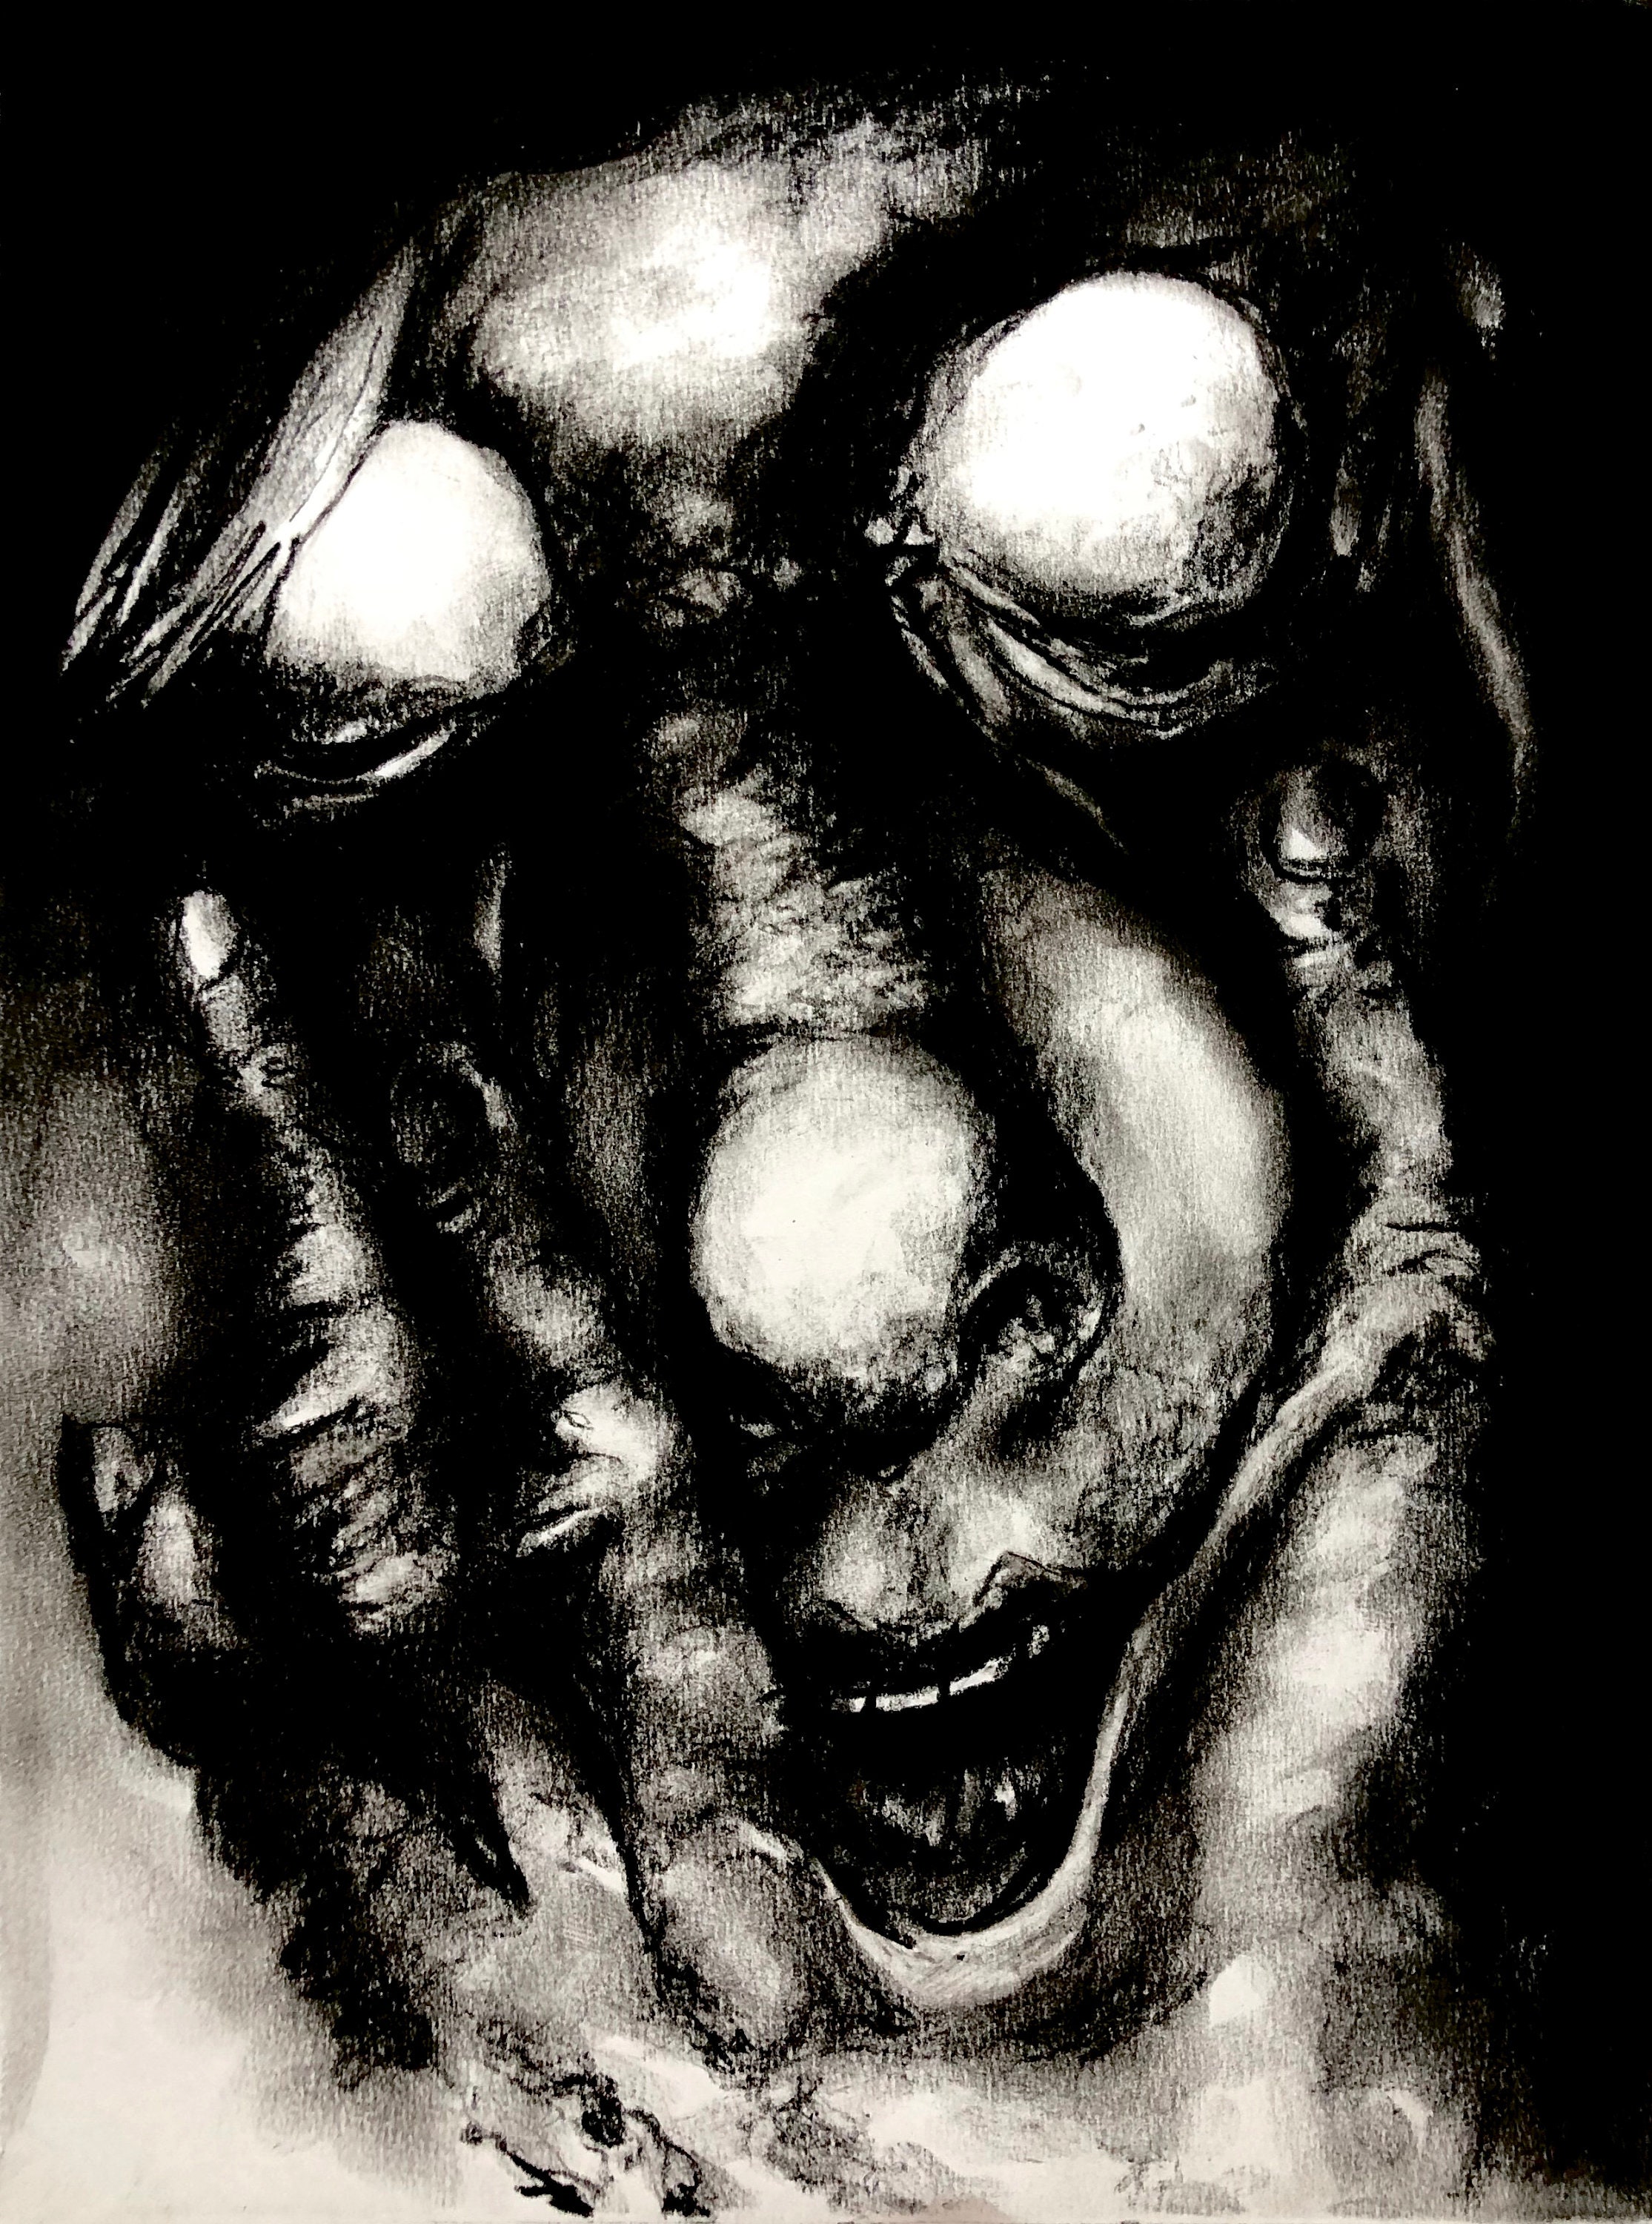 Charcoal art/ charcoal drawing/horror art